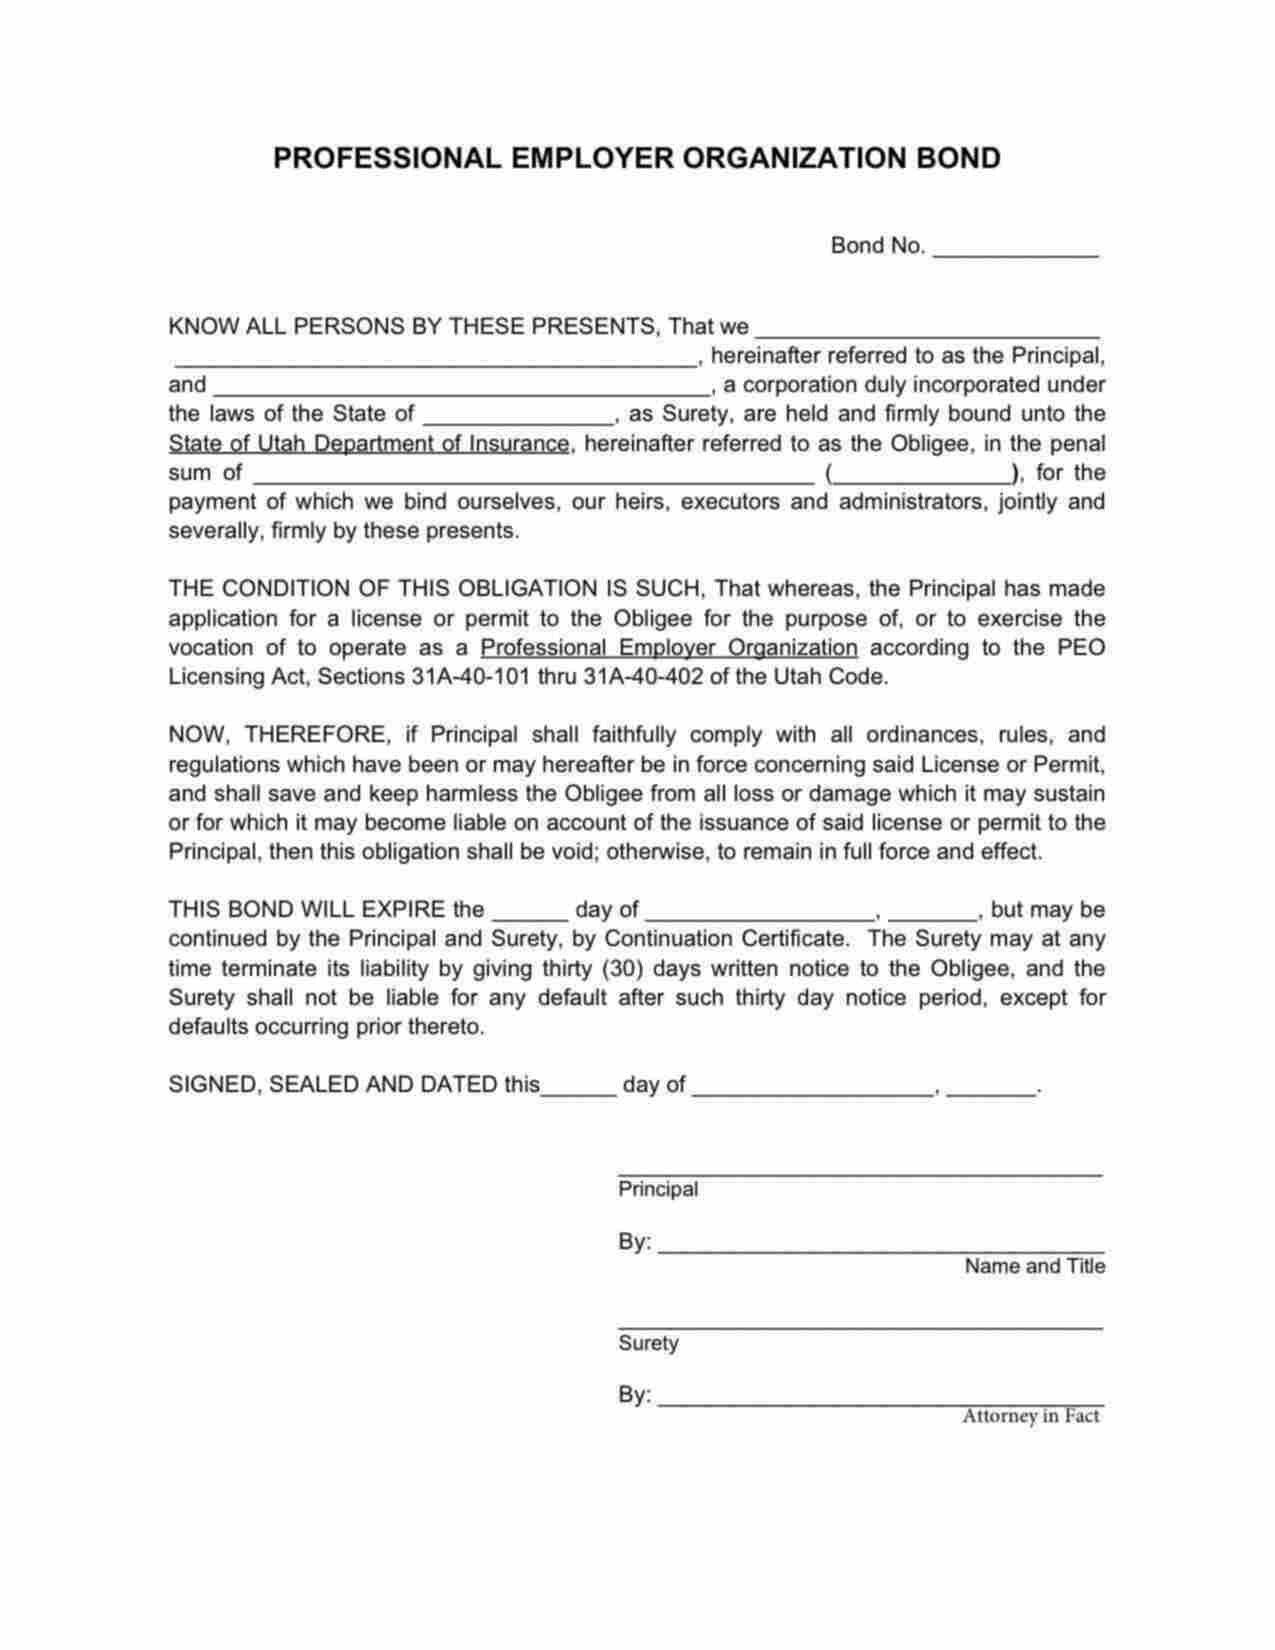 Utah Professional Employer Organization Bond Form